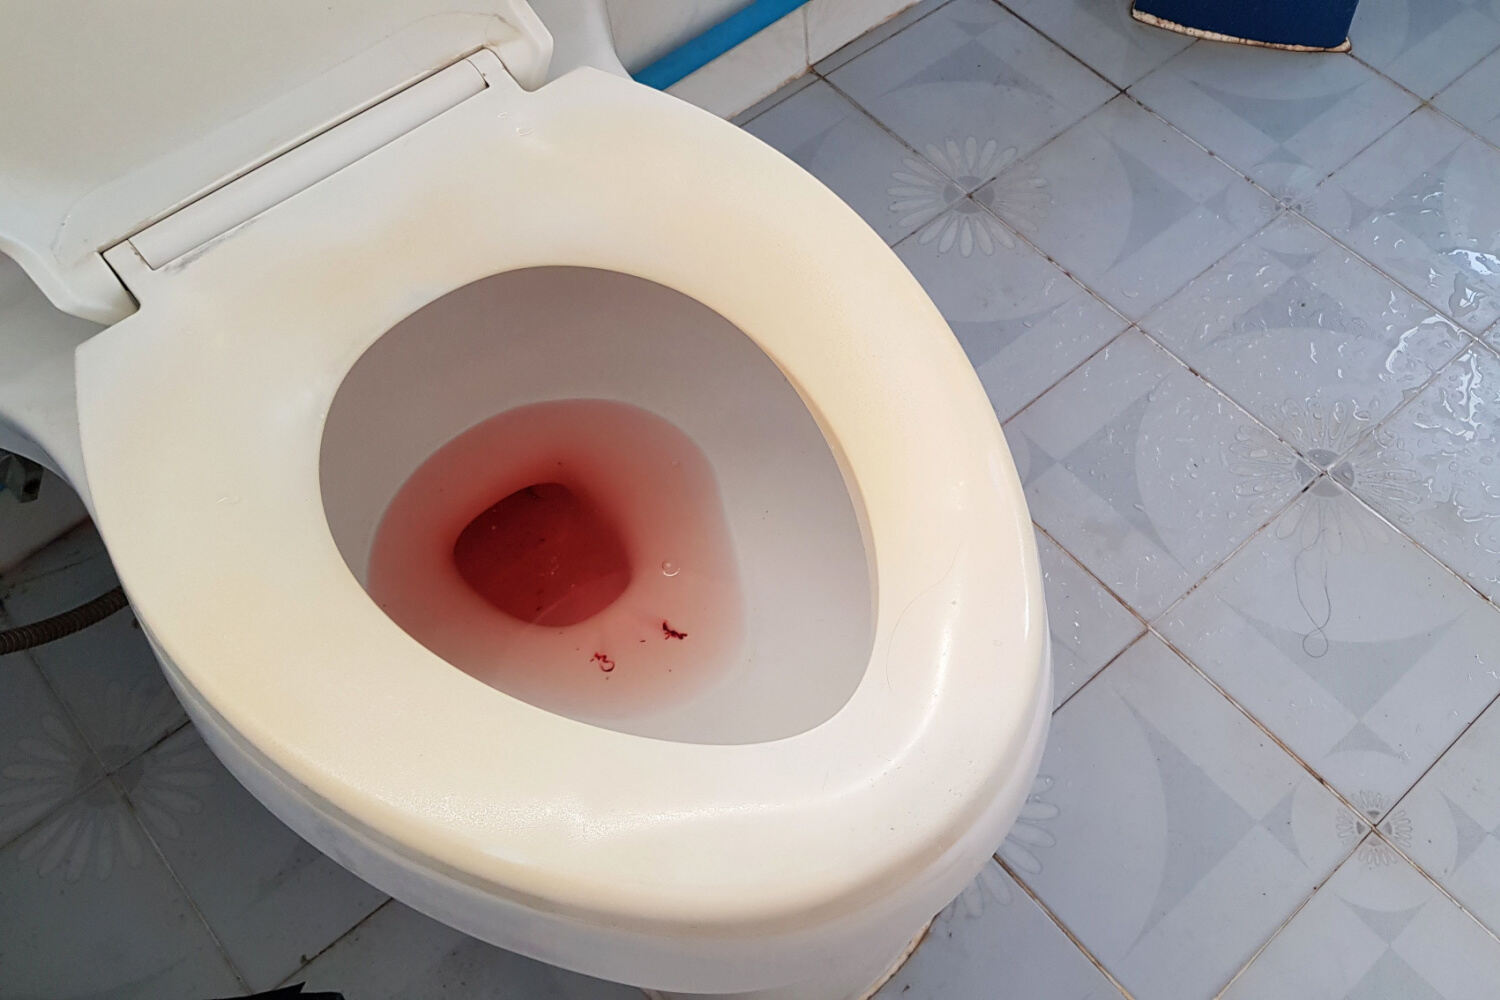 Blood in urine